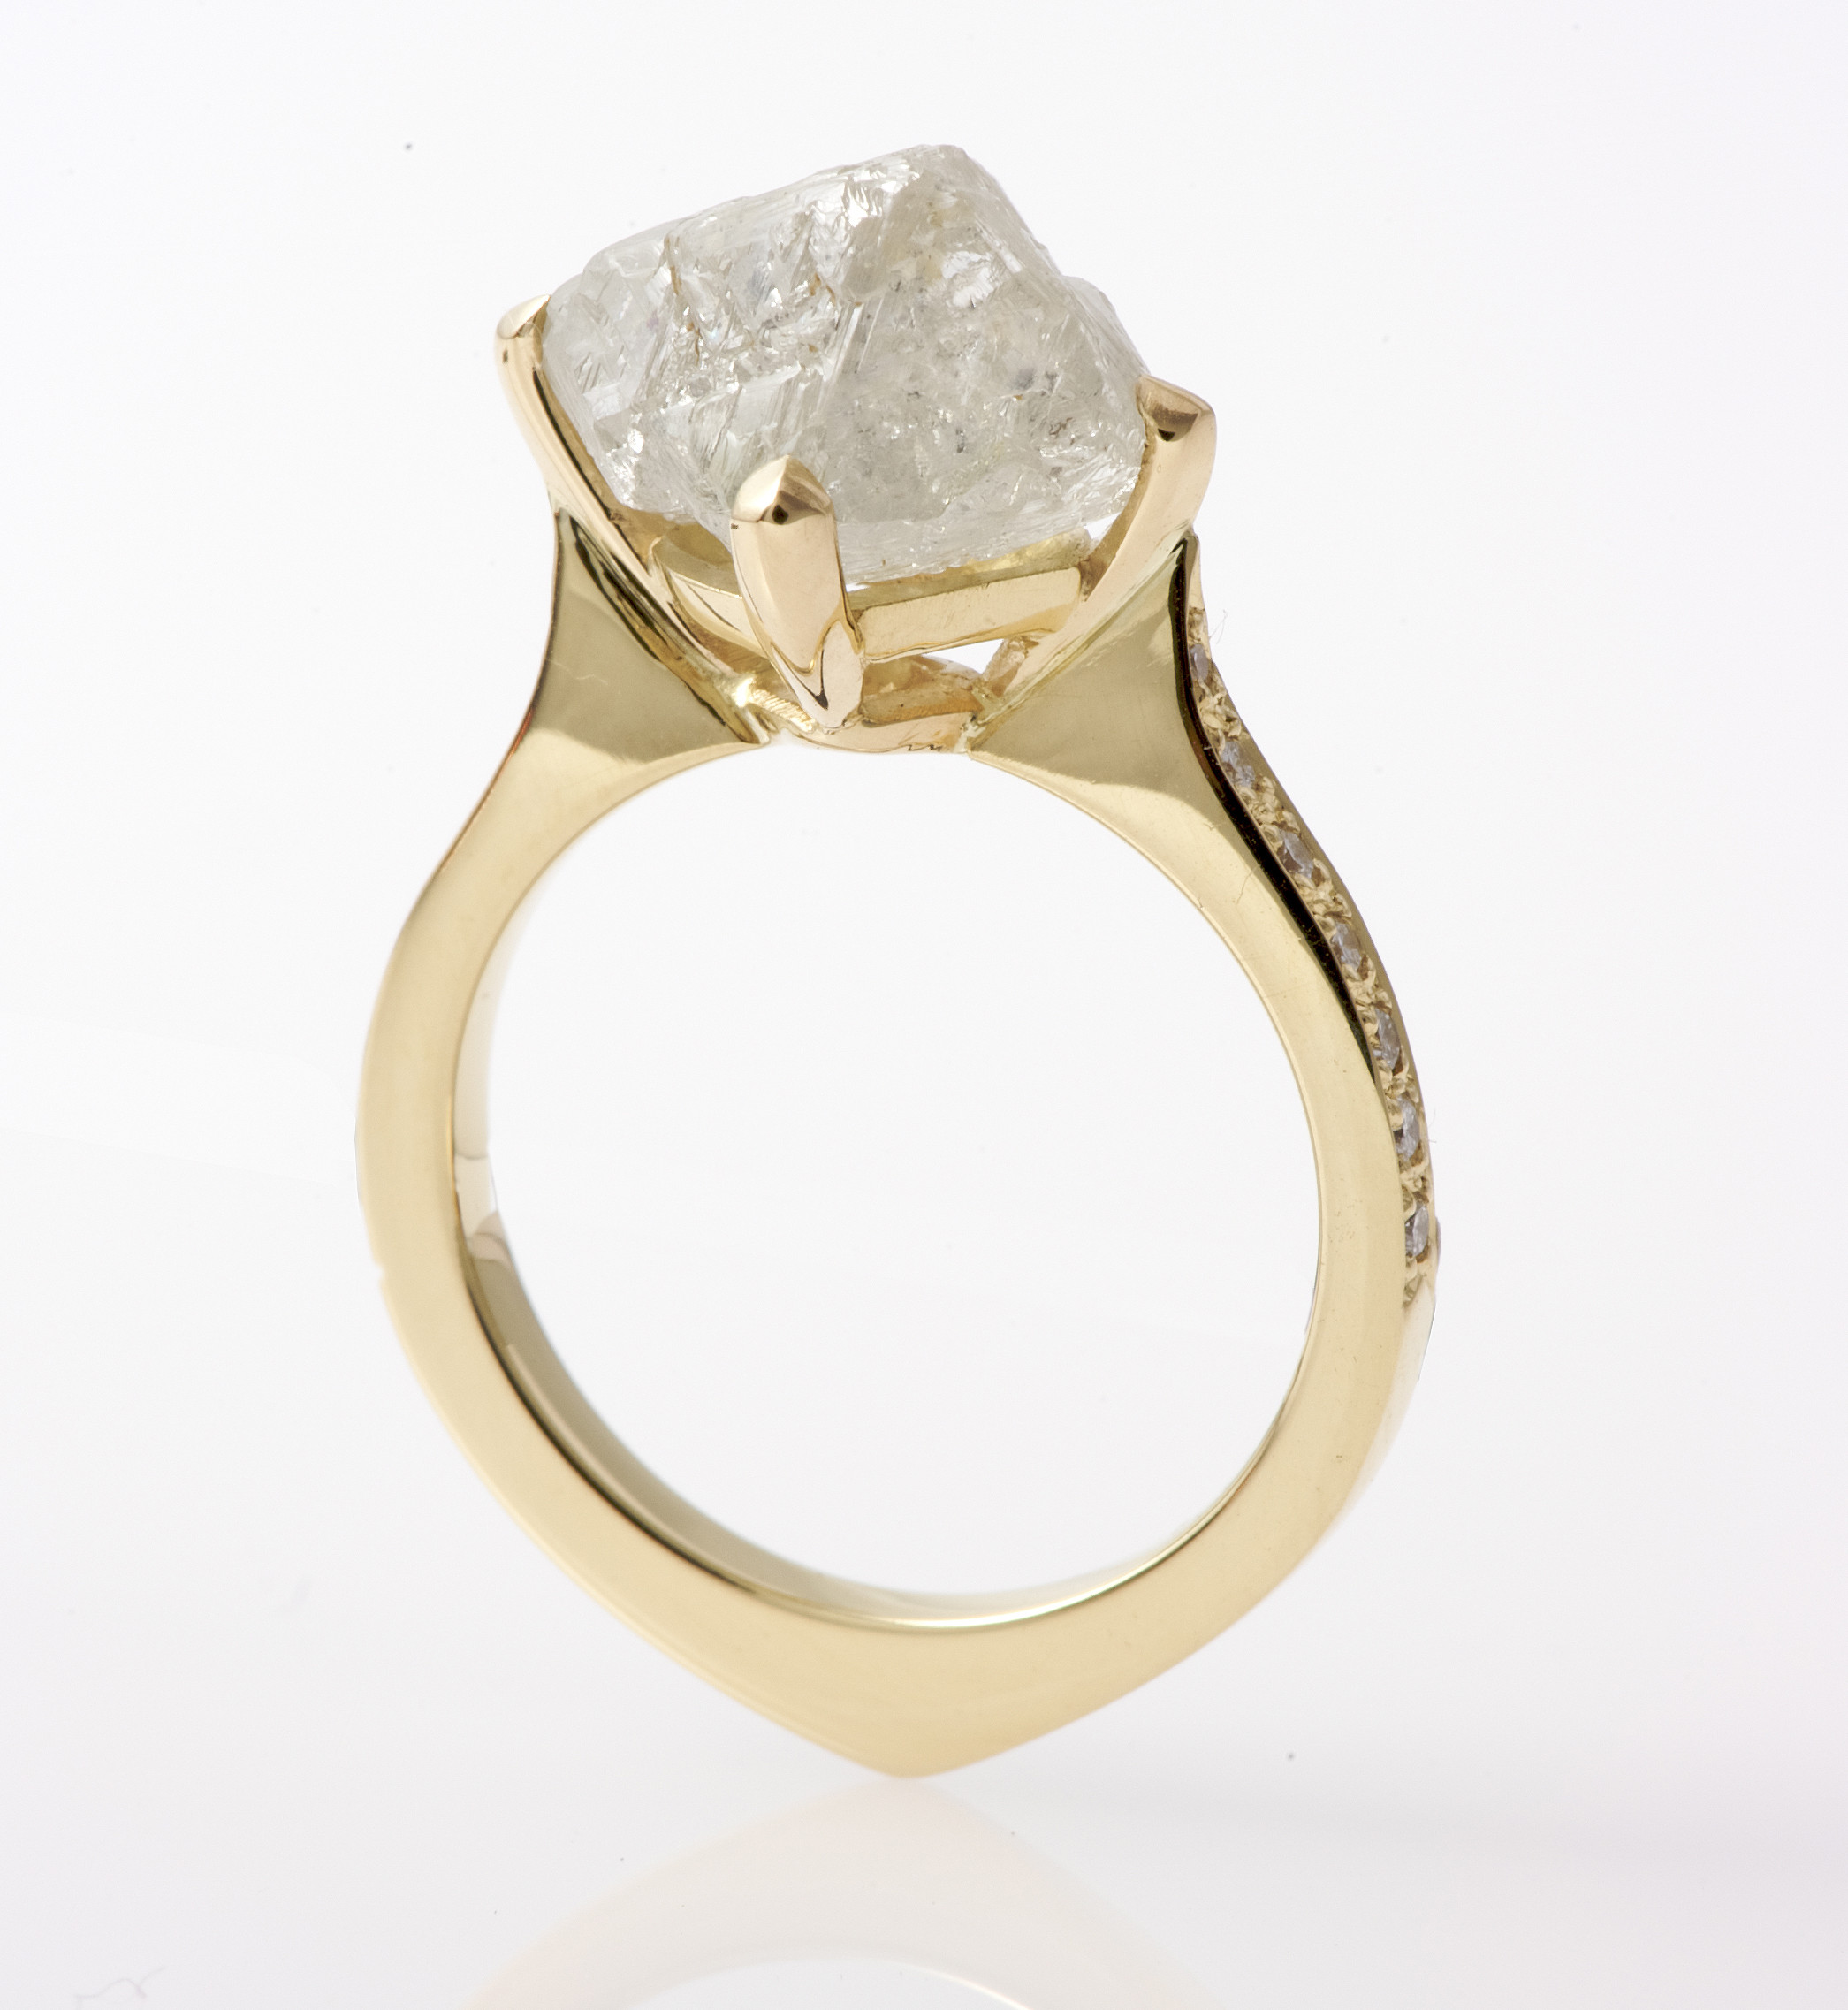 Rough Cut Diamond Engagement Ring
 Natural Raw Beauty of Uncut Diamonds